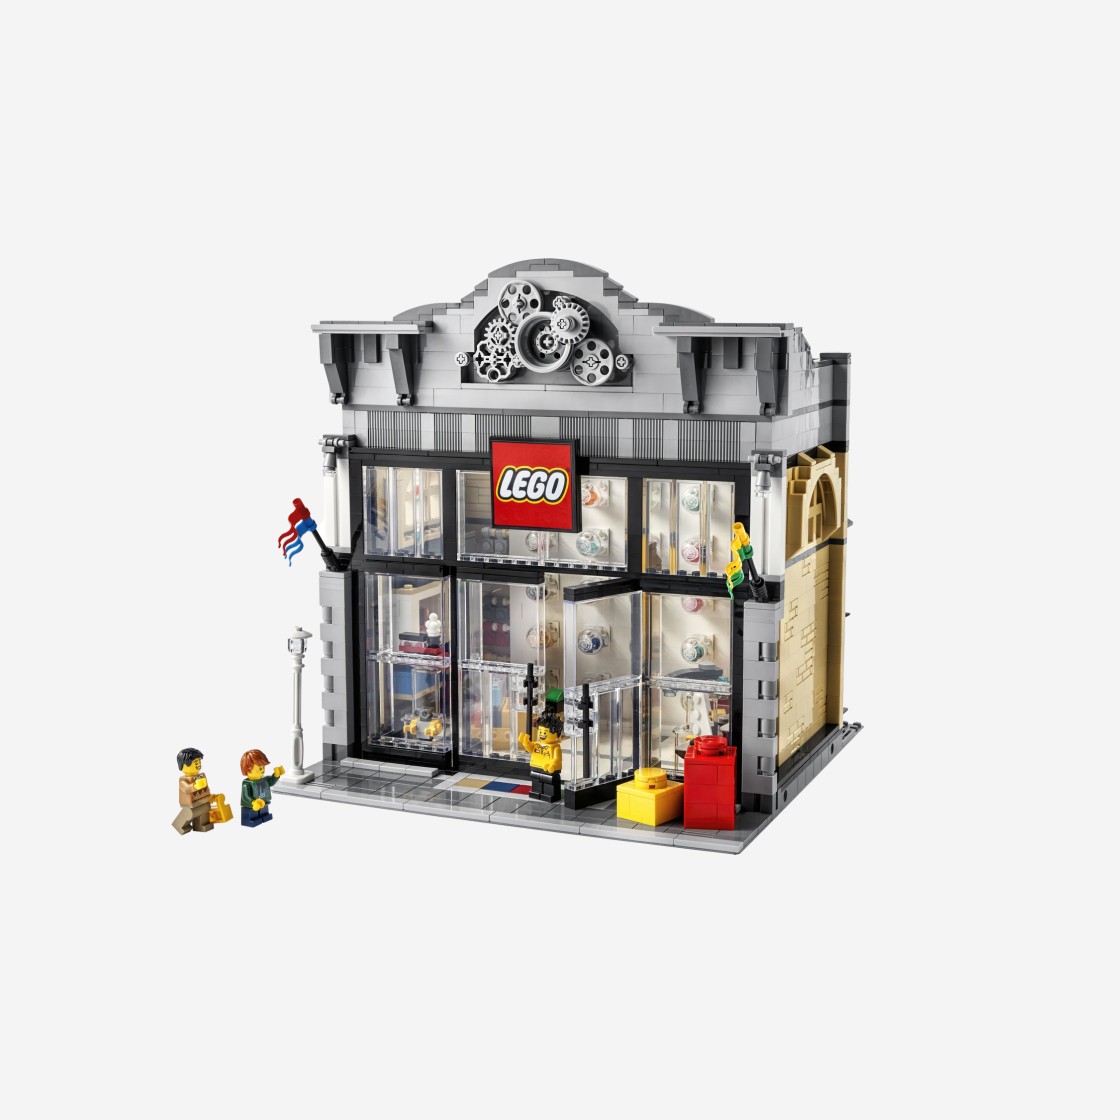 Lego] 레고 X 브릭링크 모듈러 레고 스토어 발매 정보 - 910009 - 럭드 (Luck-D)